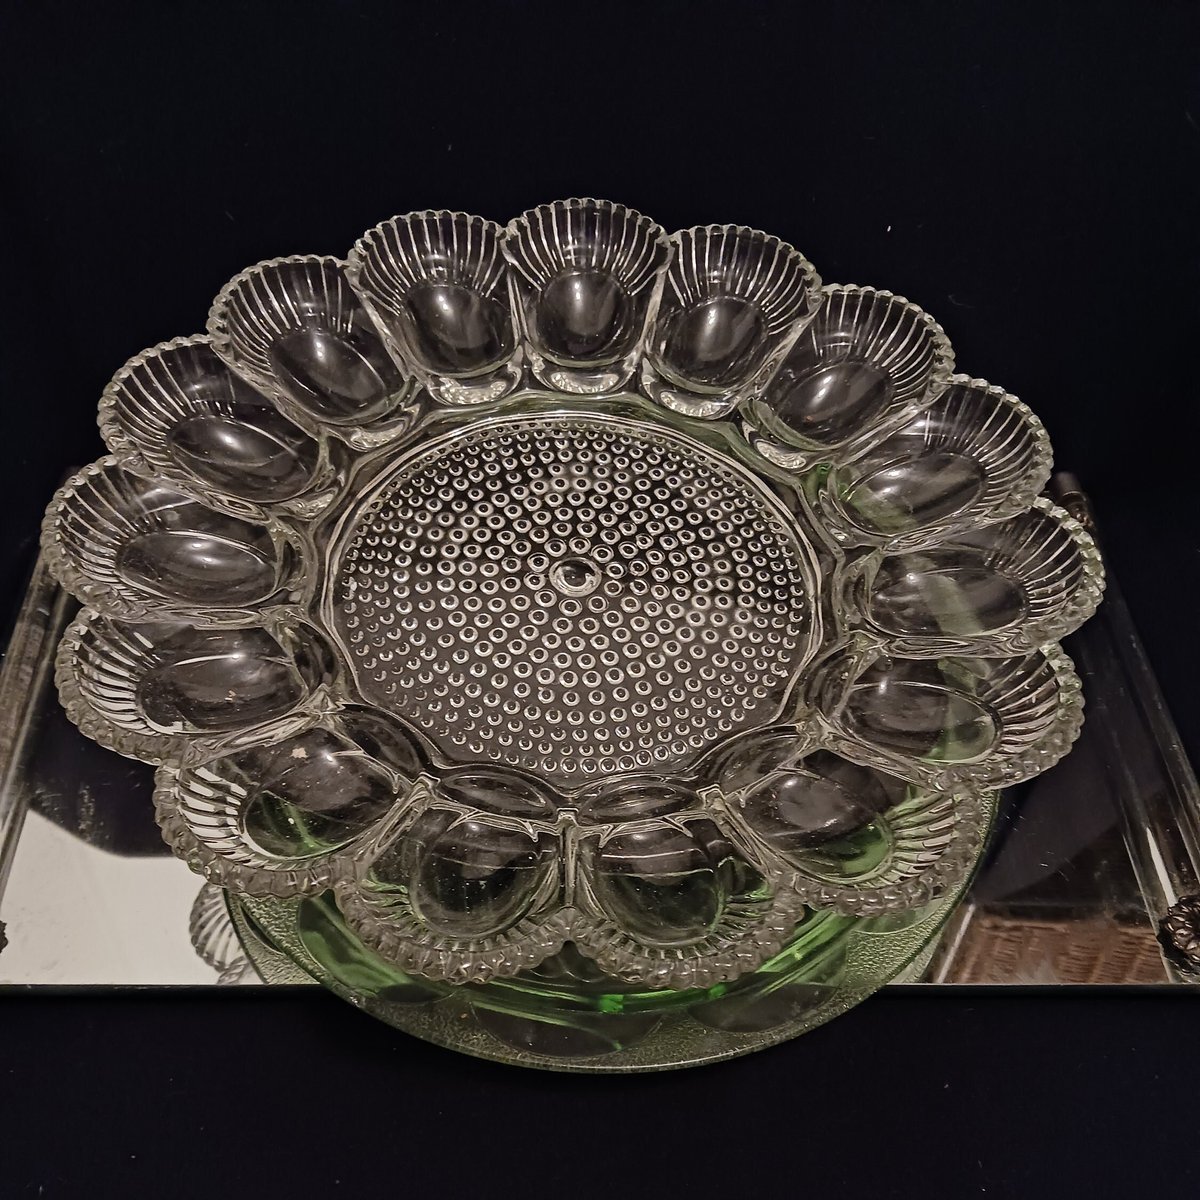 #etsy shop:Indiana glass Deviled Egg Platter etsy.me/3QsShcJ #hobnail #wedding #easter #eggplate #hobnaileggplate #lesmithhobnail #eggplatter #deviledeggplate #pressedglass #relishdish #indianaglass #ingianaglasseggplate #deviledegg #servingplate #artglass #art